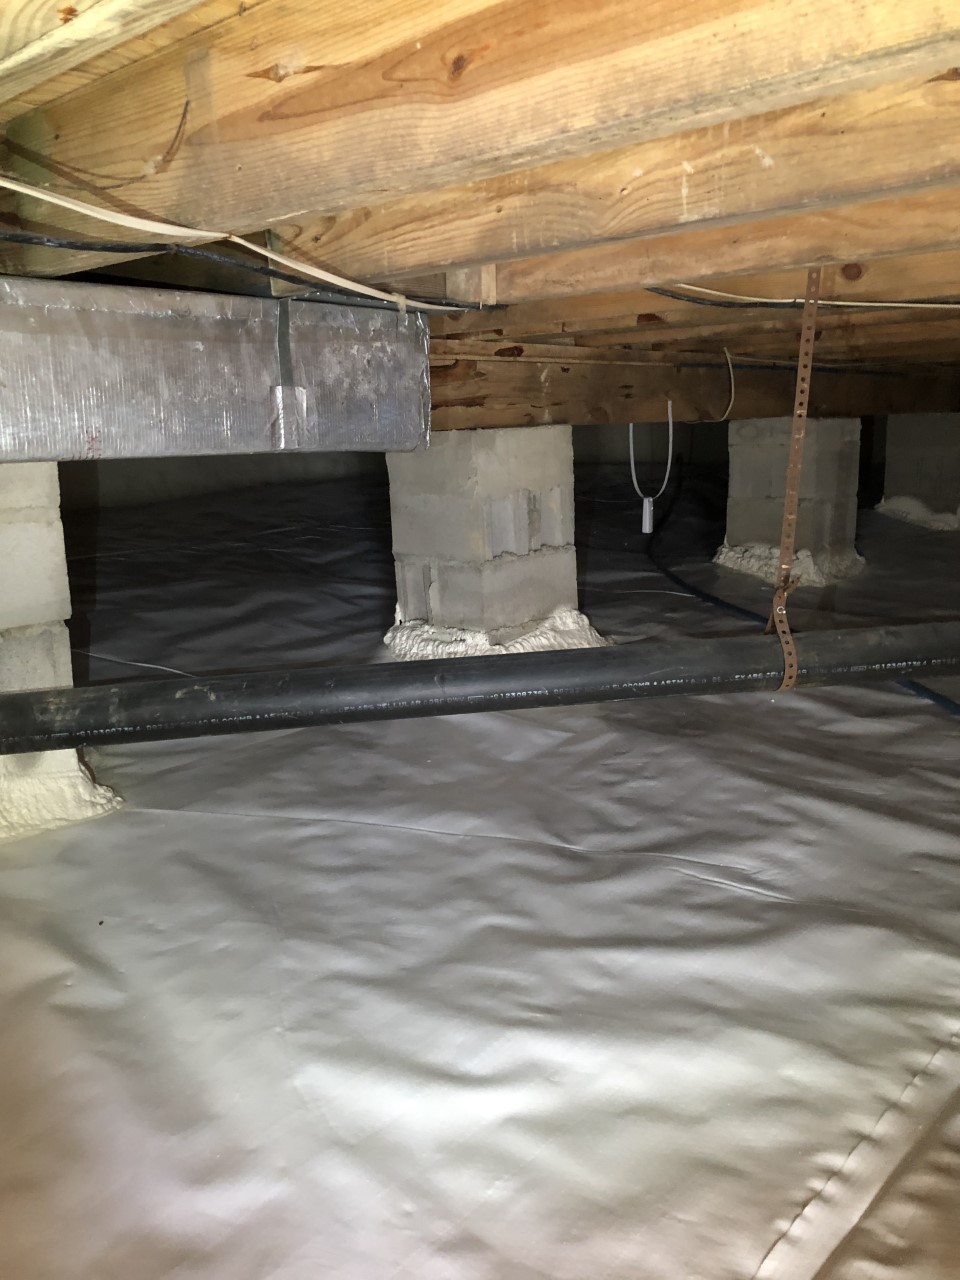 Crawl space foundation insulated with spray foam insulation in richmond va